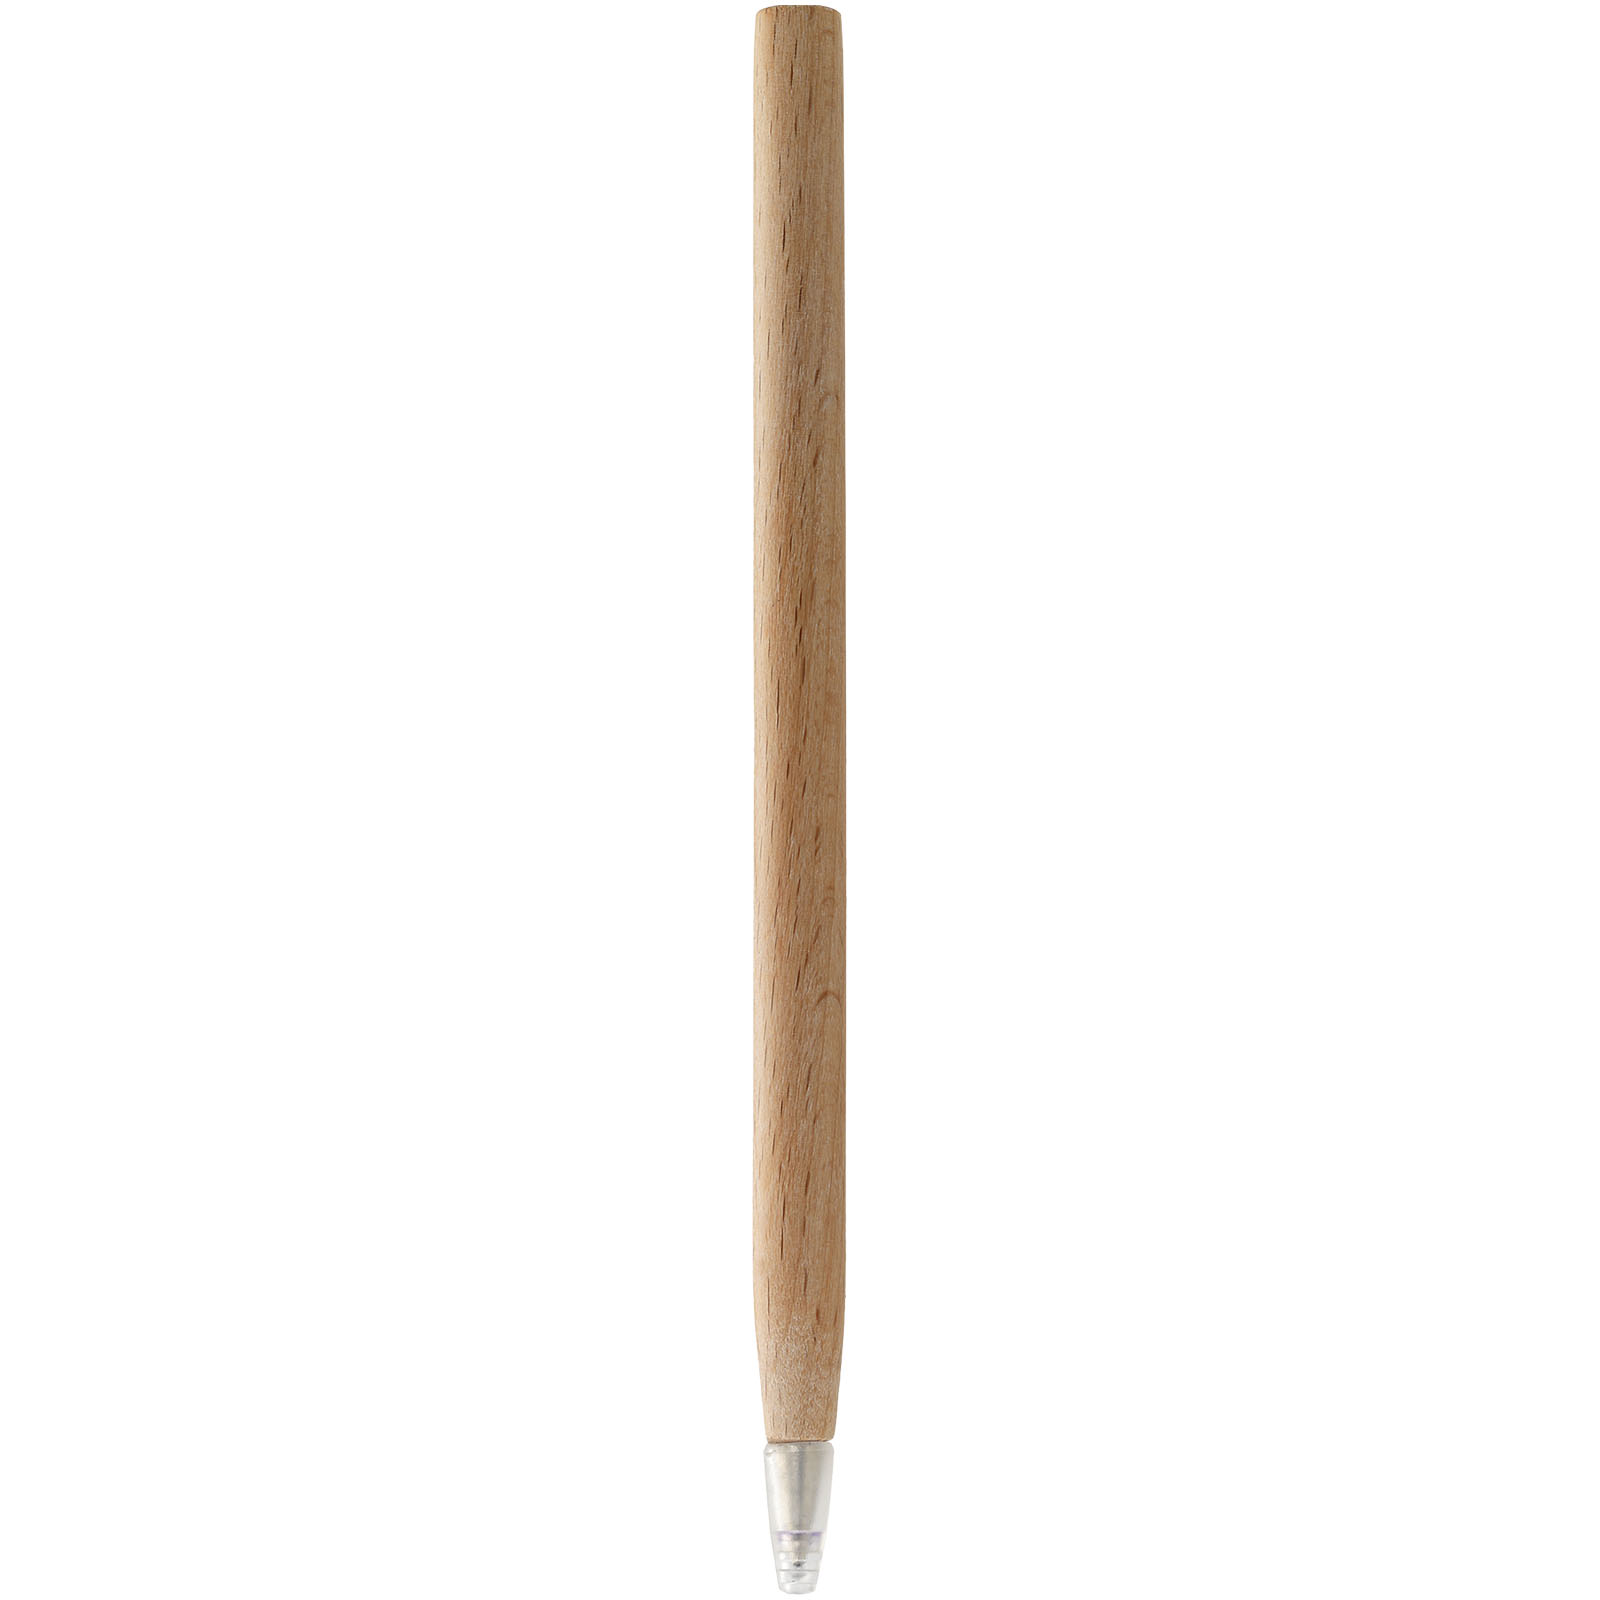 Advertising Ballpoint Pens - Arica wooden ballpoint pen - 1